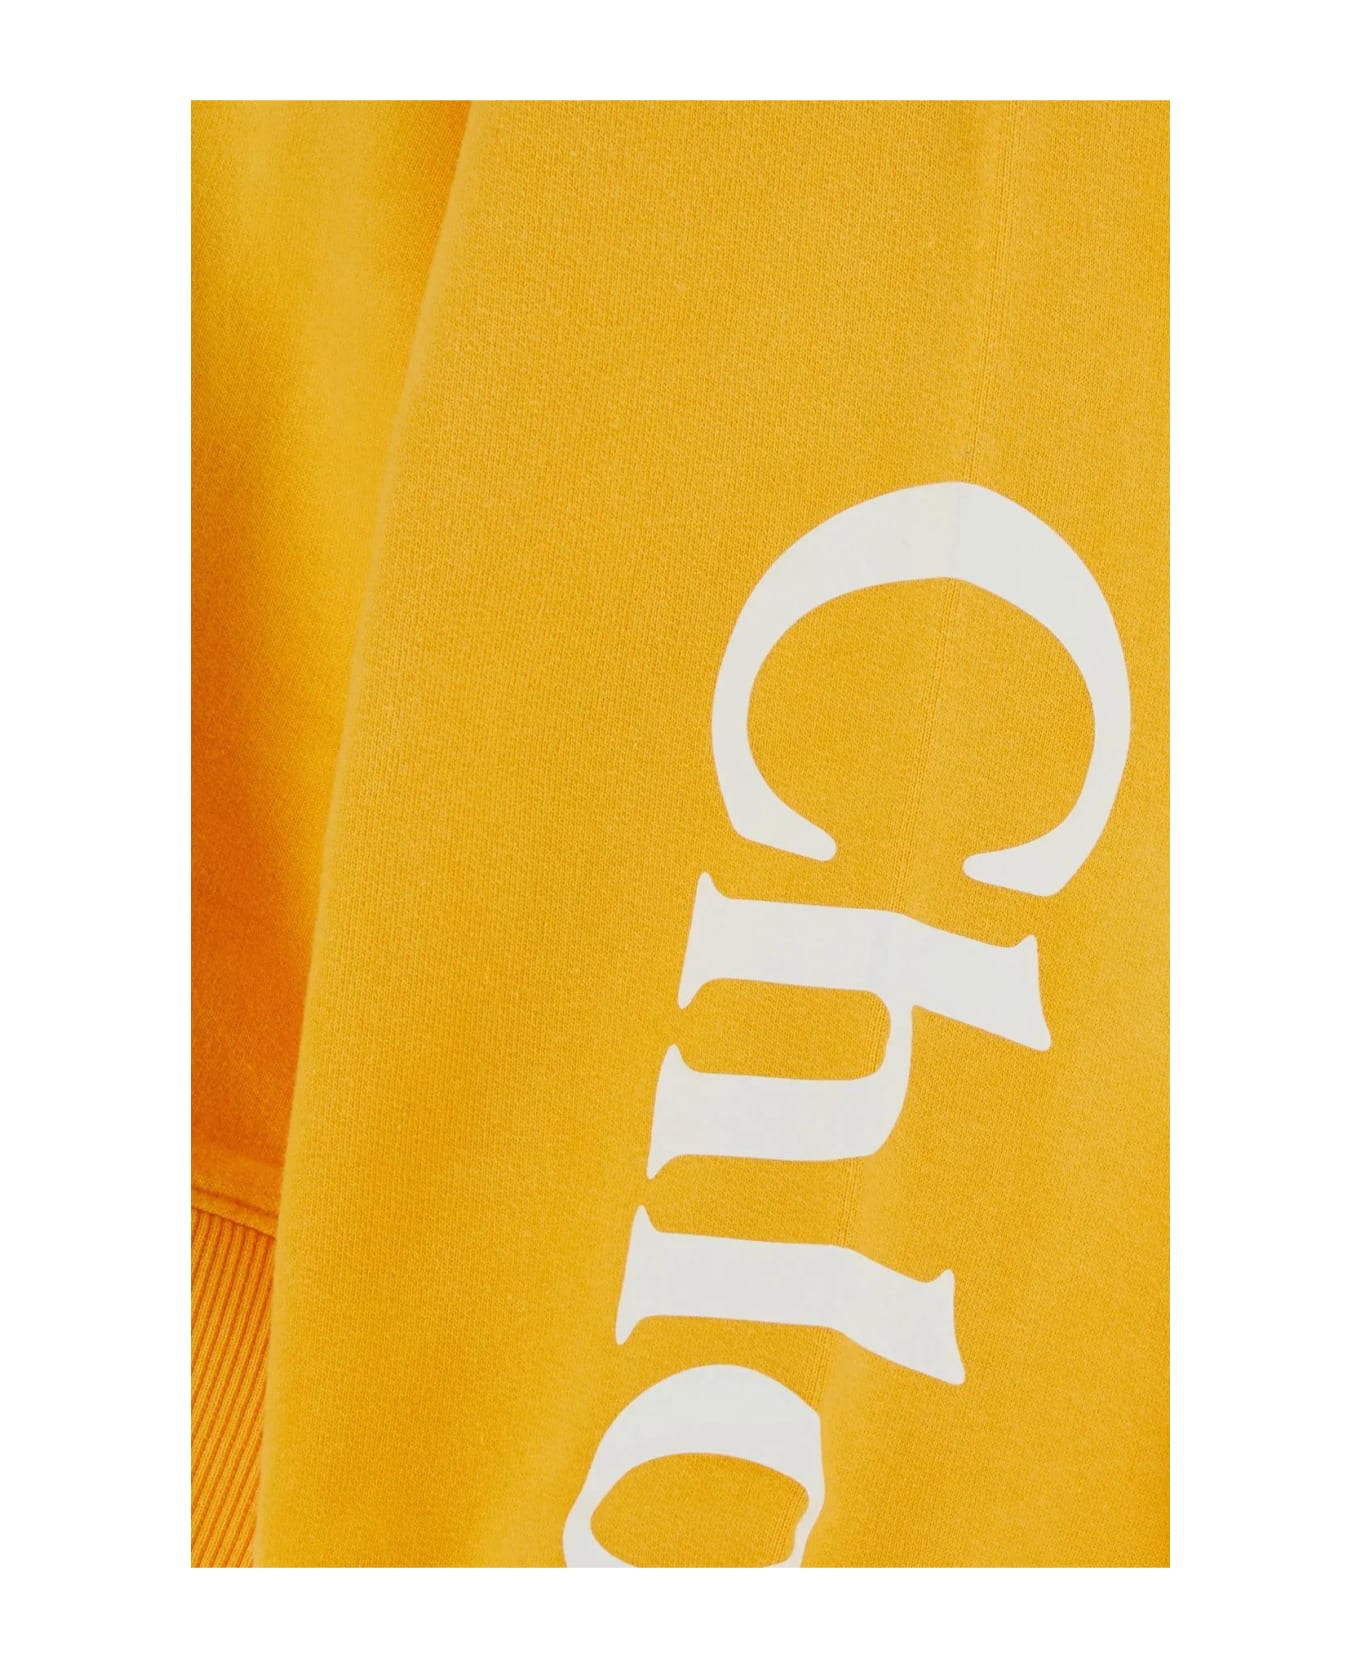 Chloé Cotton Oversize Sweatshirt - Multicolor